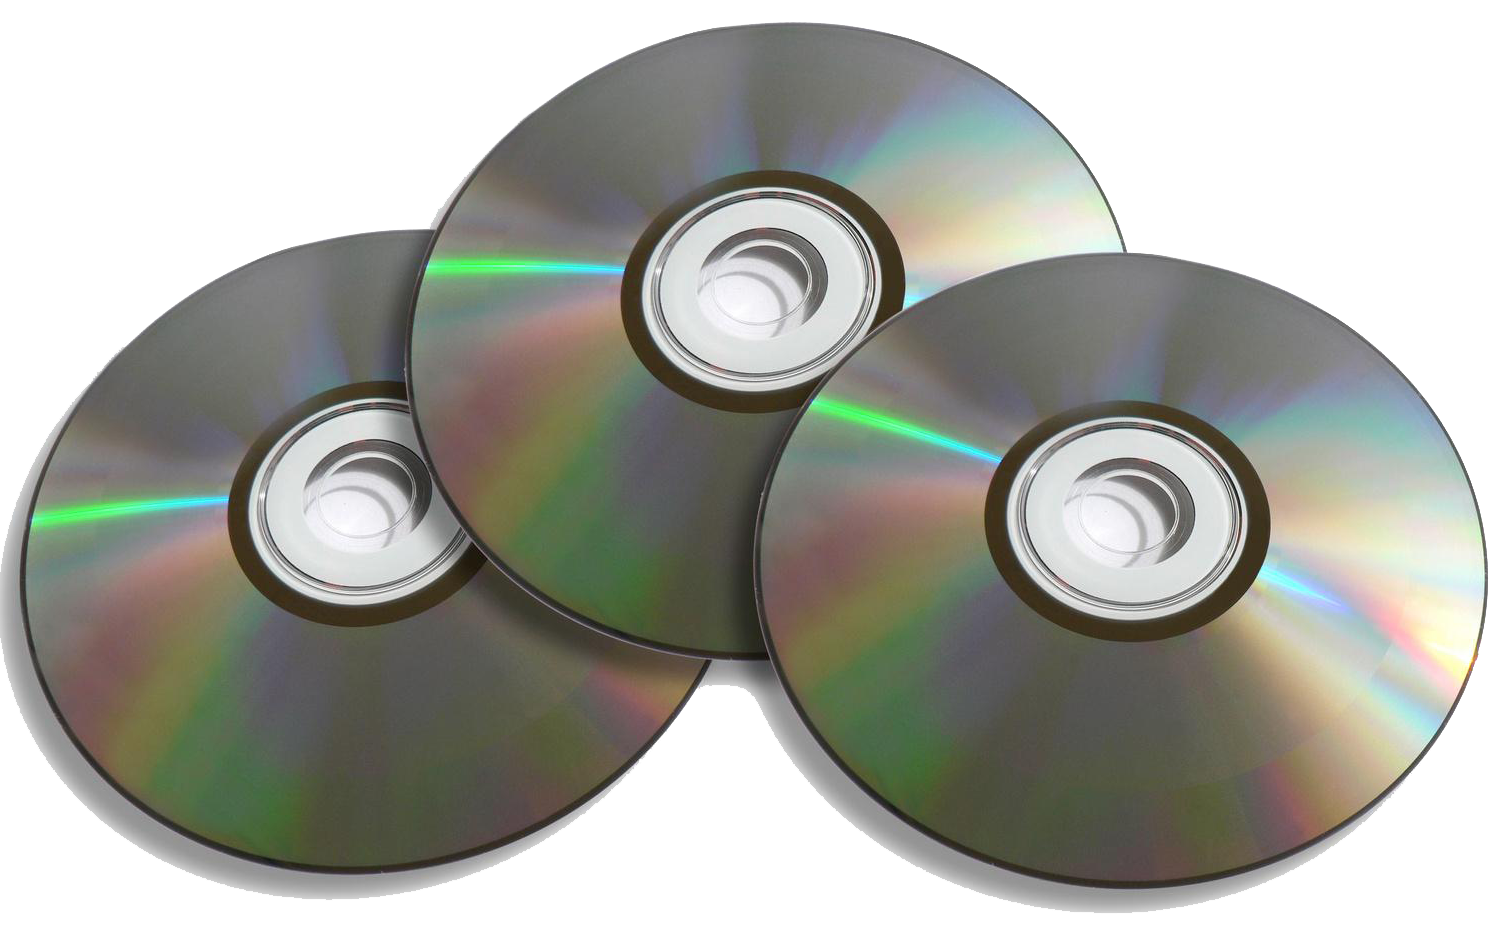 C cd y y. Компакт – диск, Compact Disc (CD). CD (Compact Disc) — оптический носитель. CD (Compact Disk ROM) DVD (Digital versatile Disc). CD-R (Compact Disk Recorder).